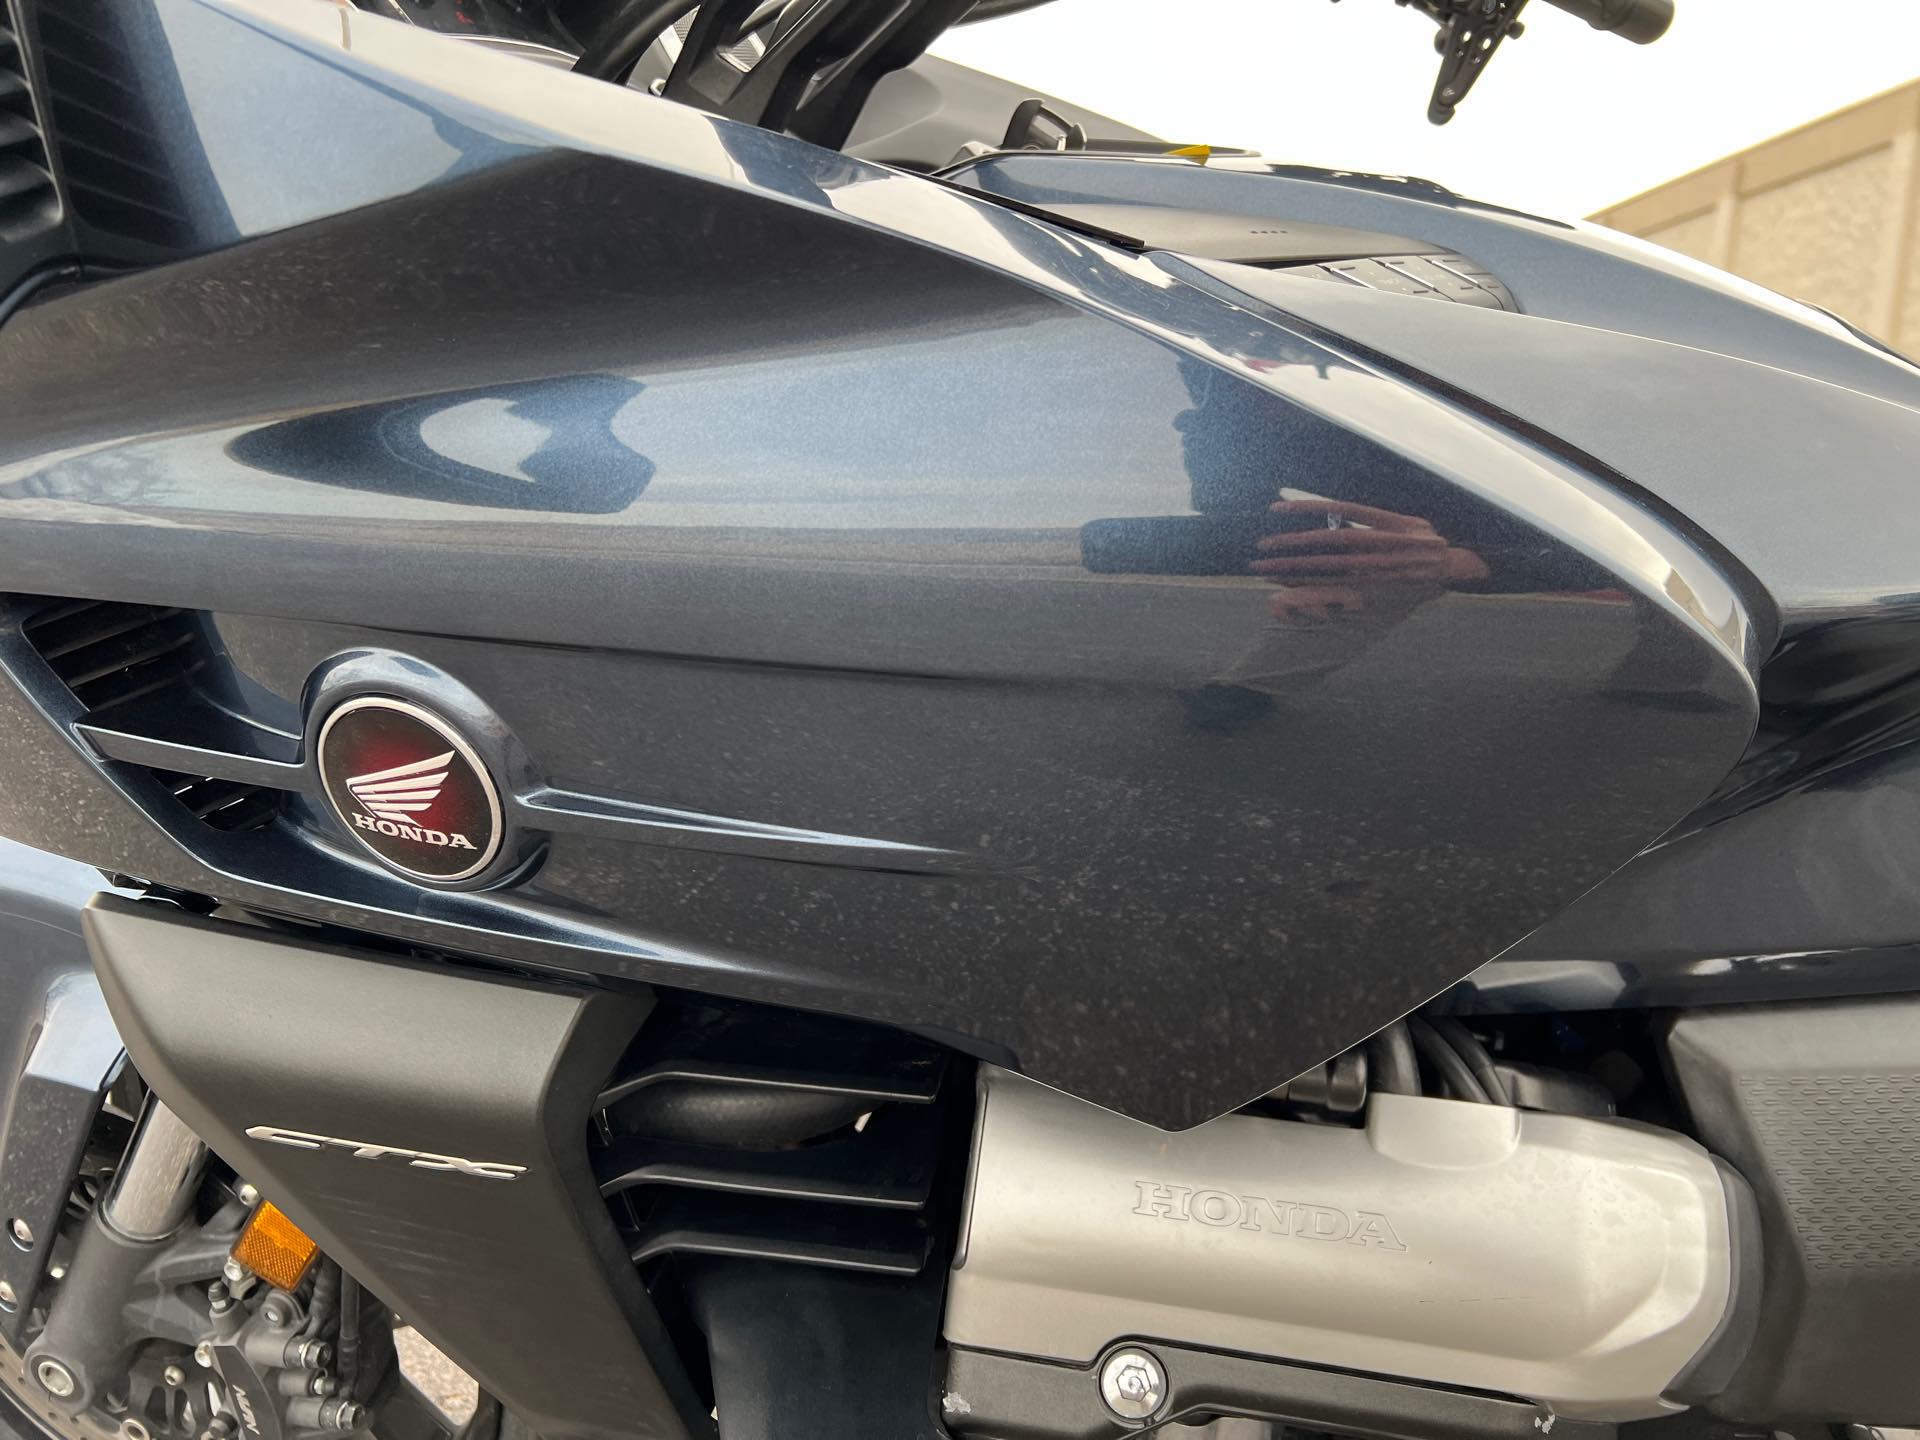 2014 Honda CTX 1300 Deluxe at Mount Rushmore Motorsports